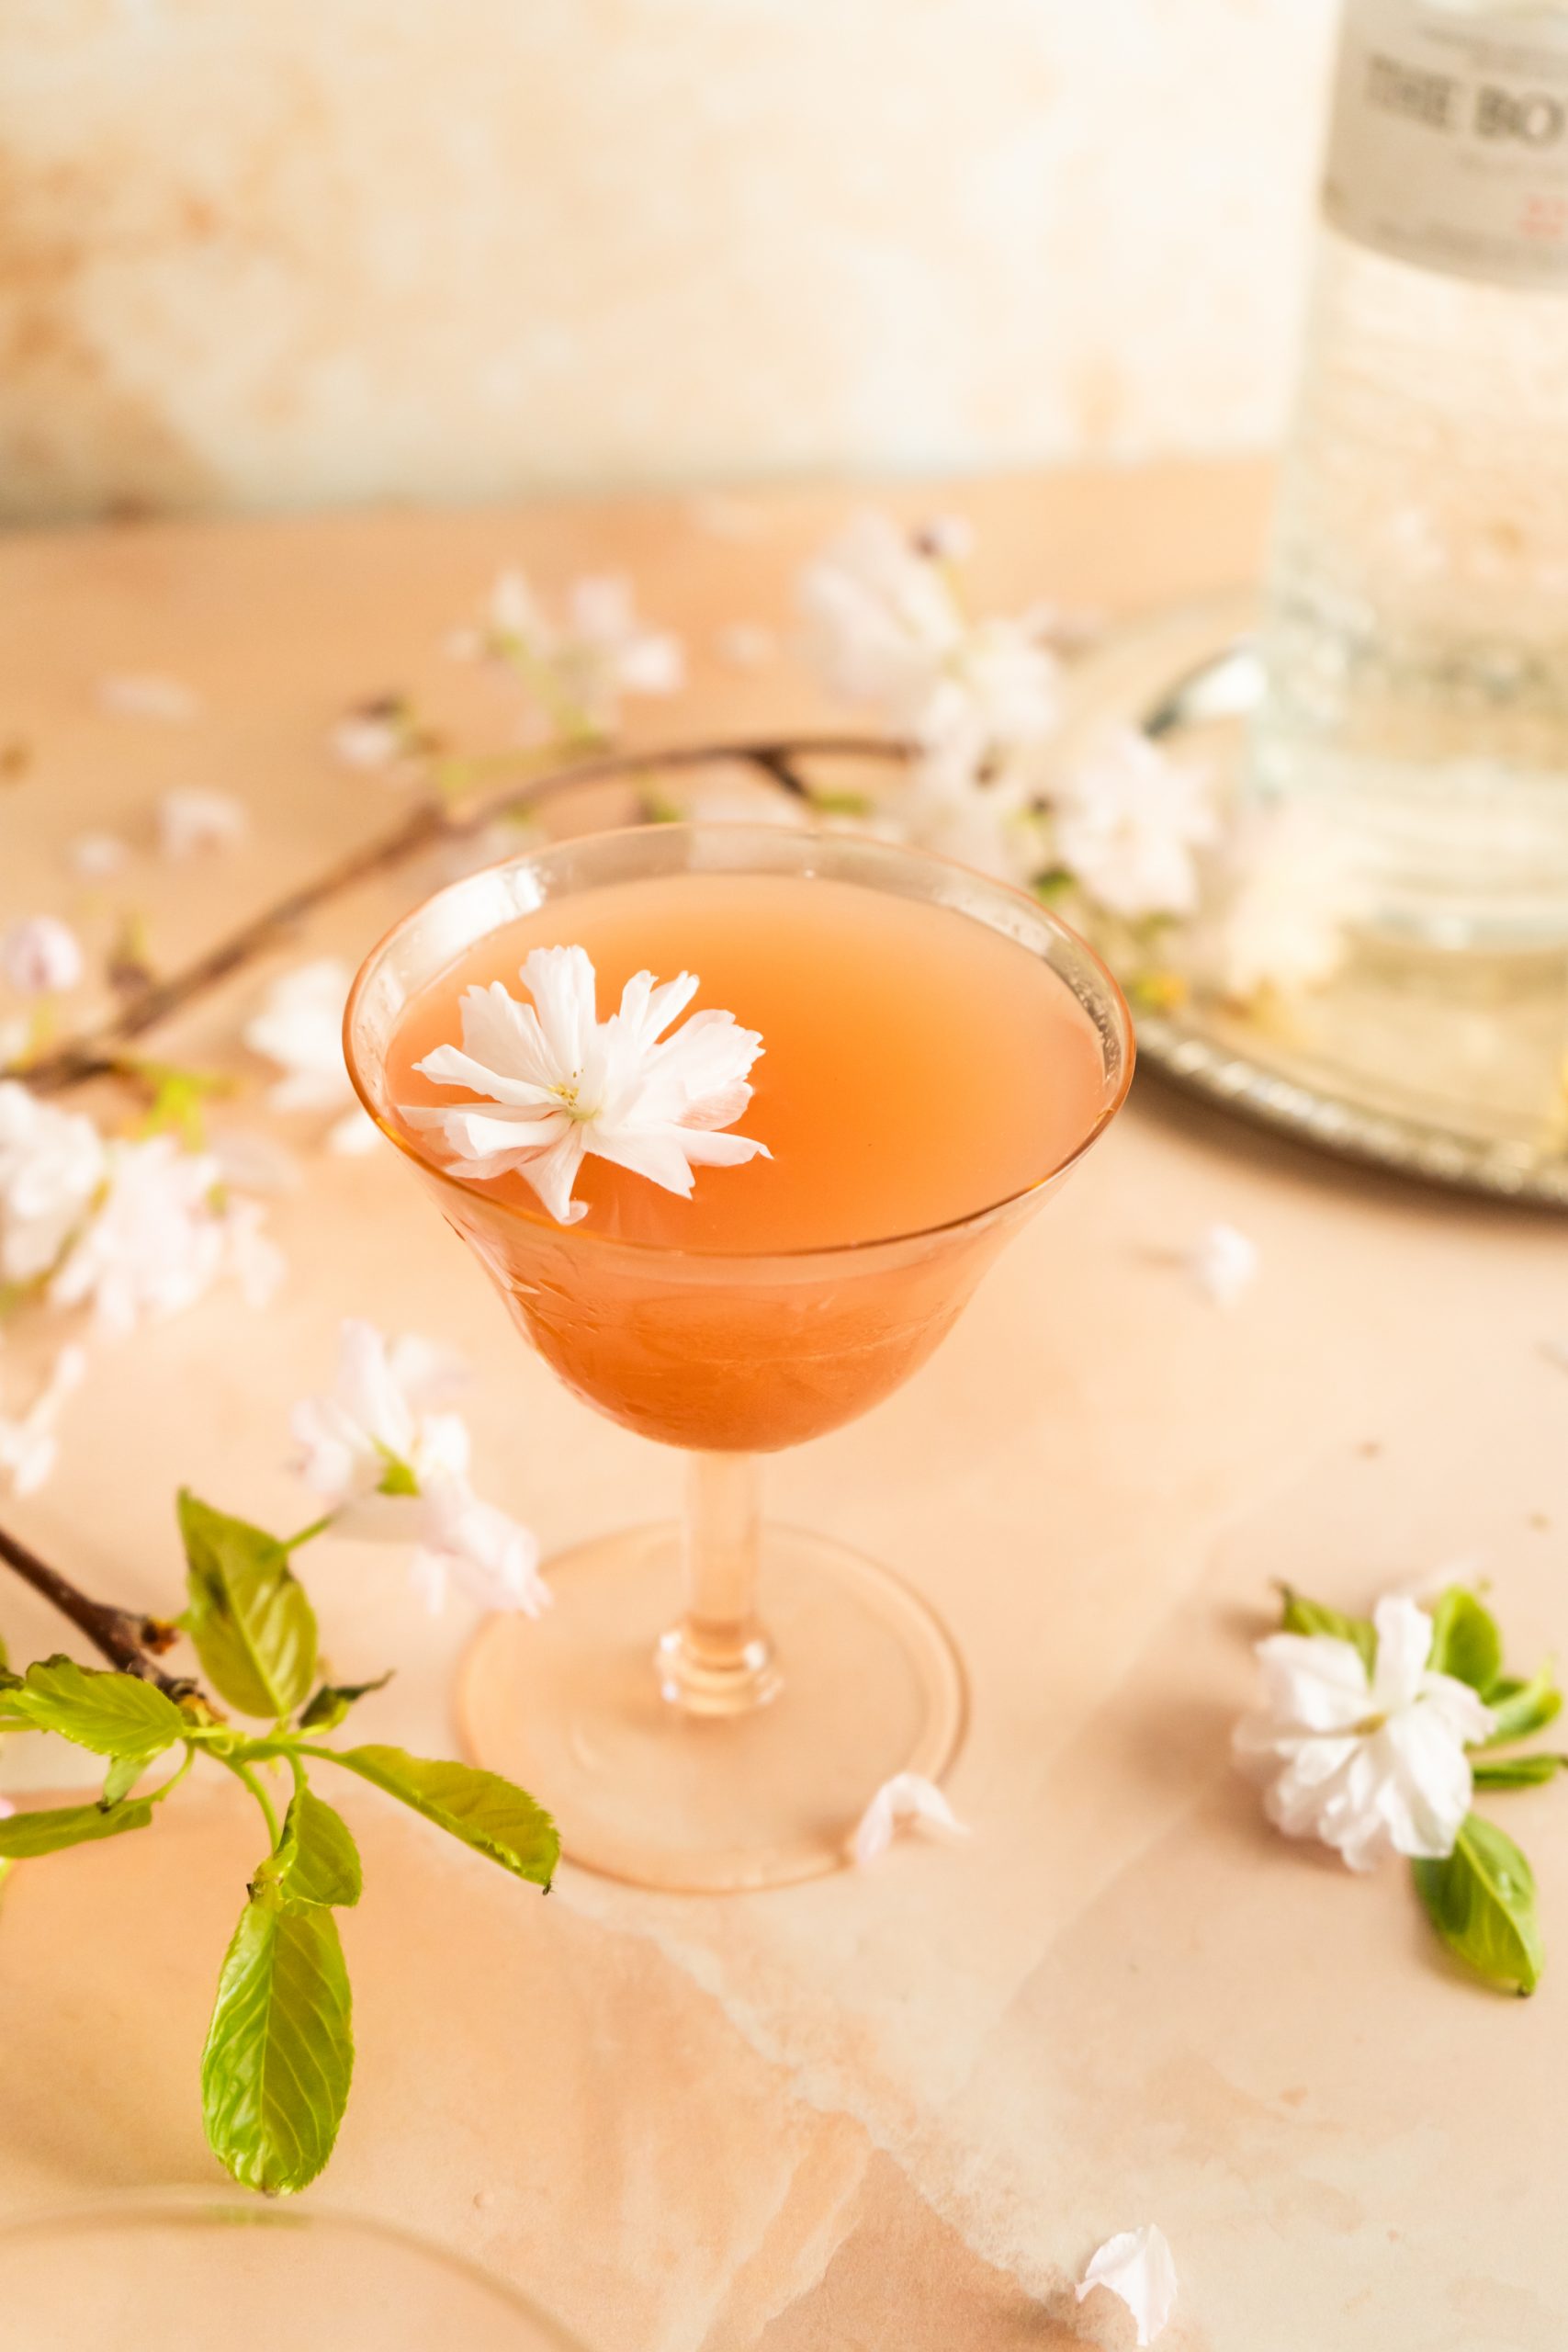 Cherry Blossom cocktail | LaptrinhX / News